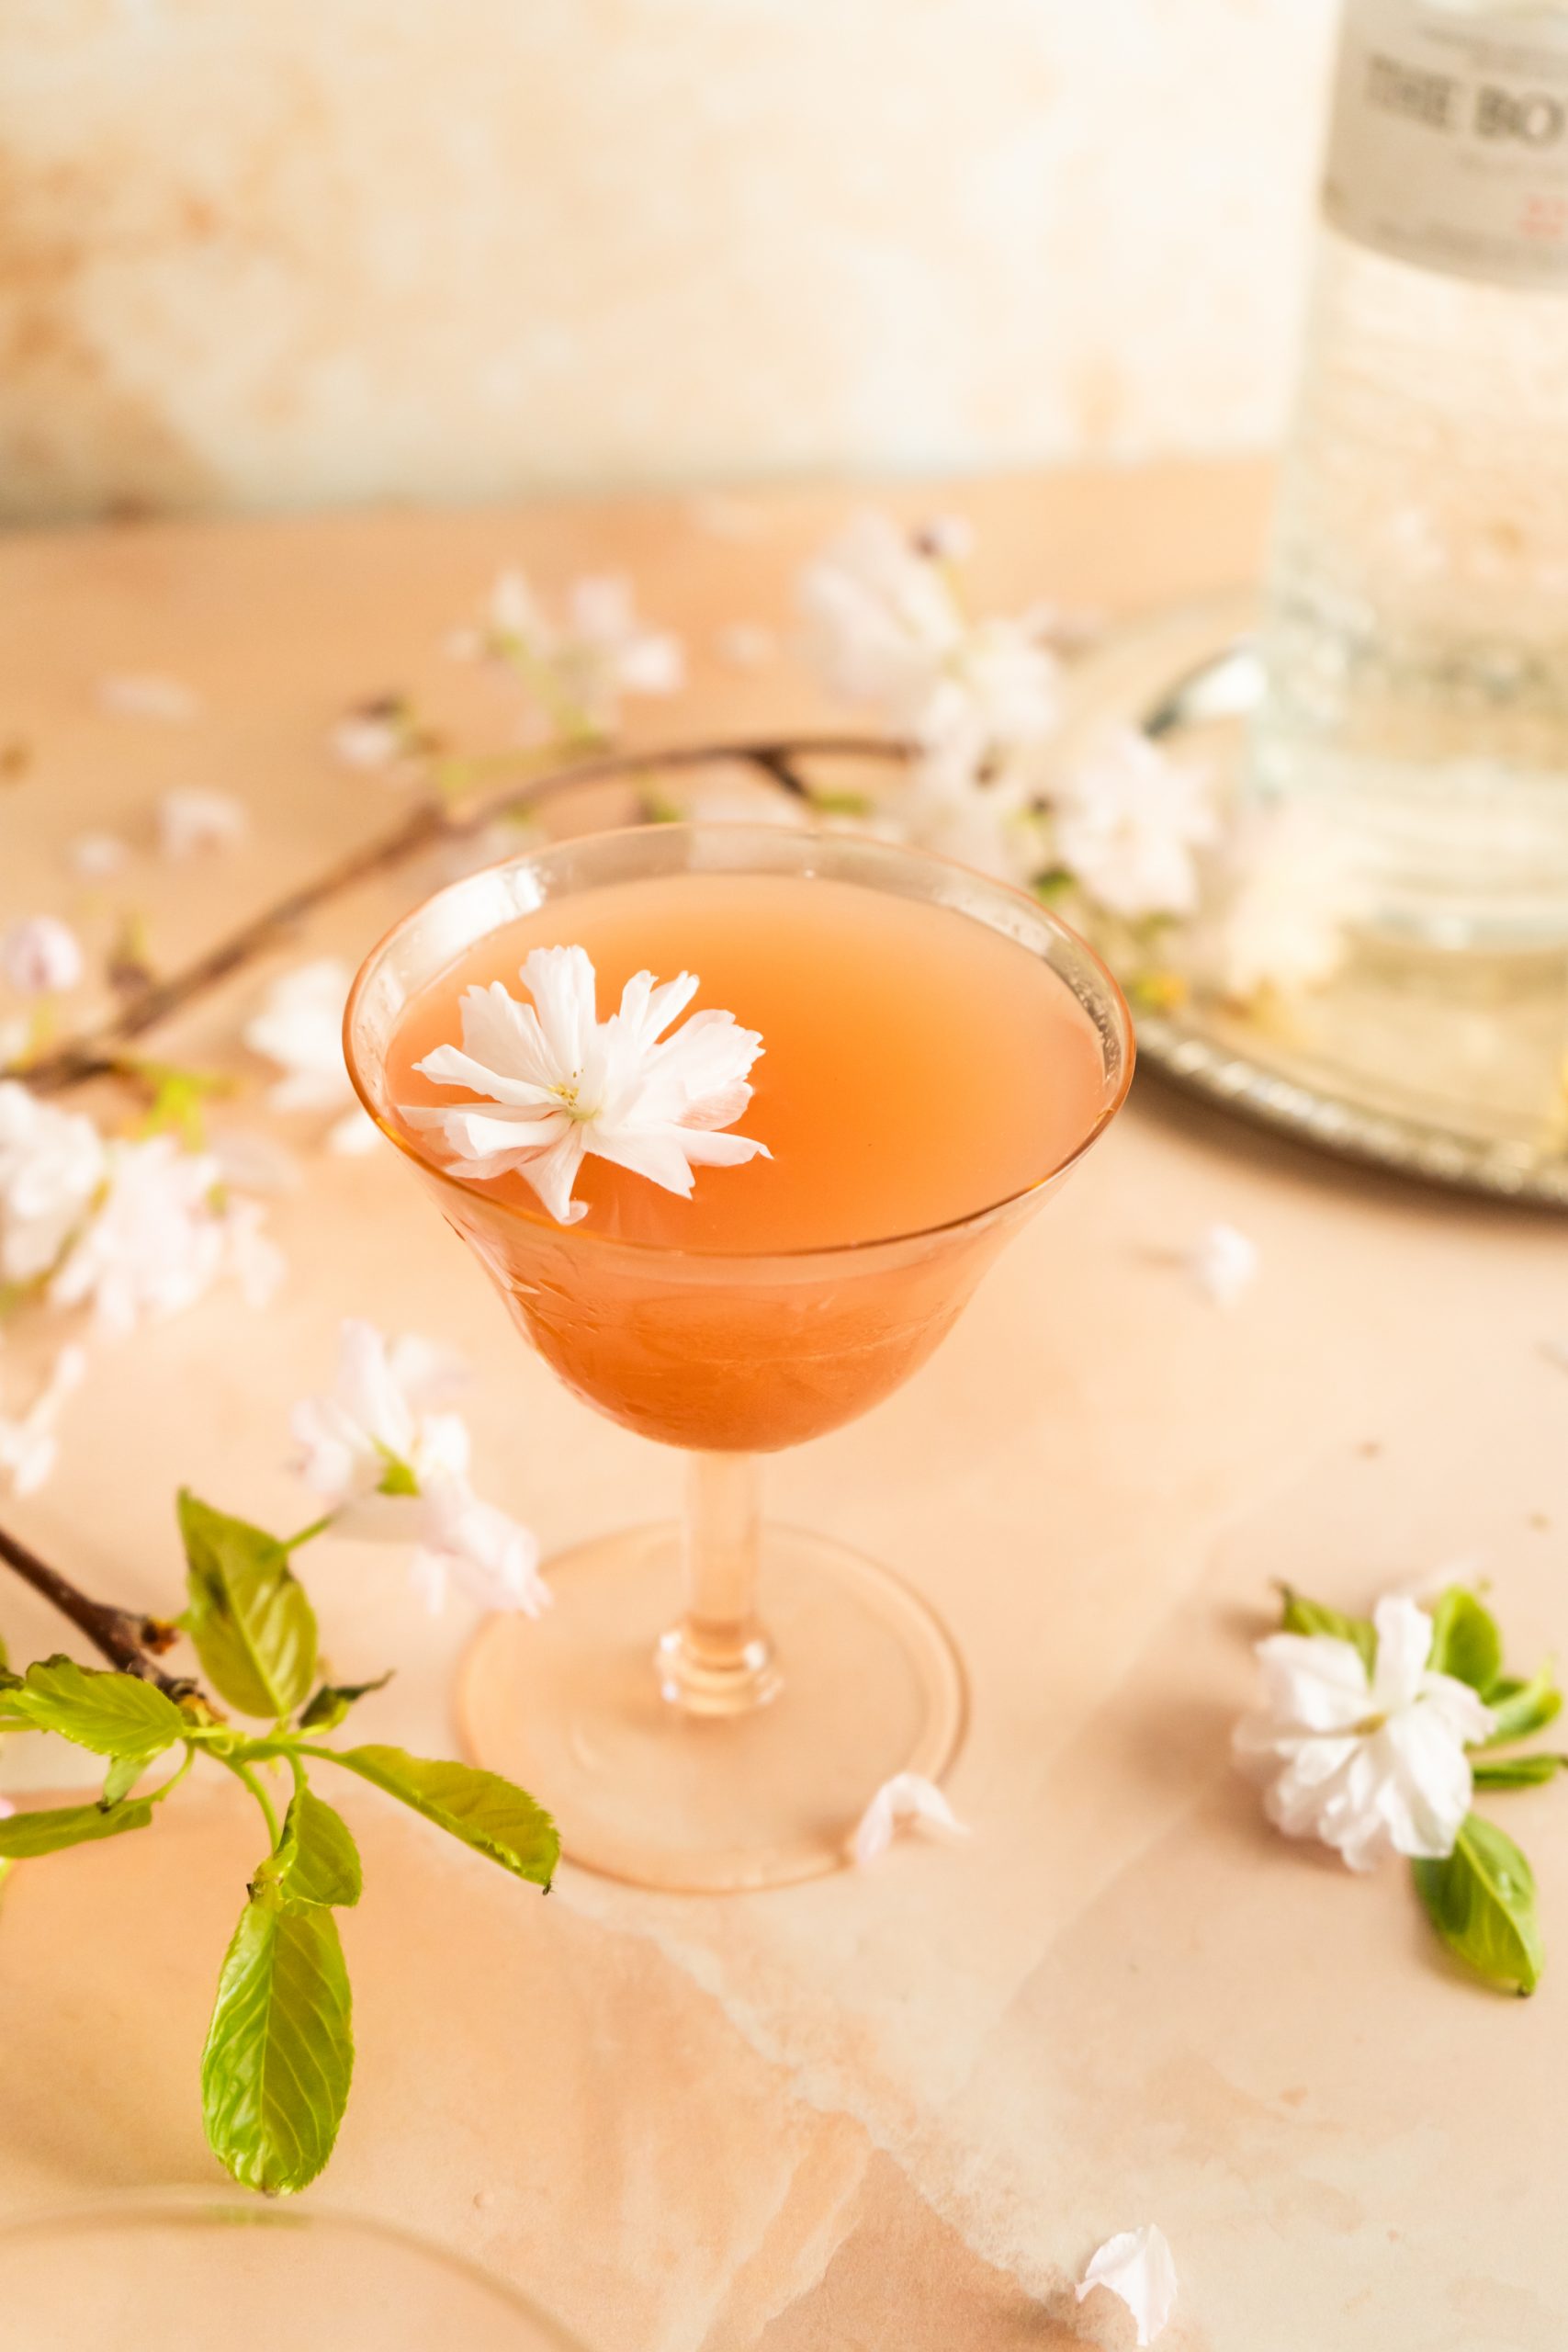 Cherry Blossom cocktail | LaptrinhX / News